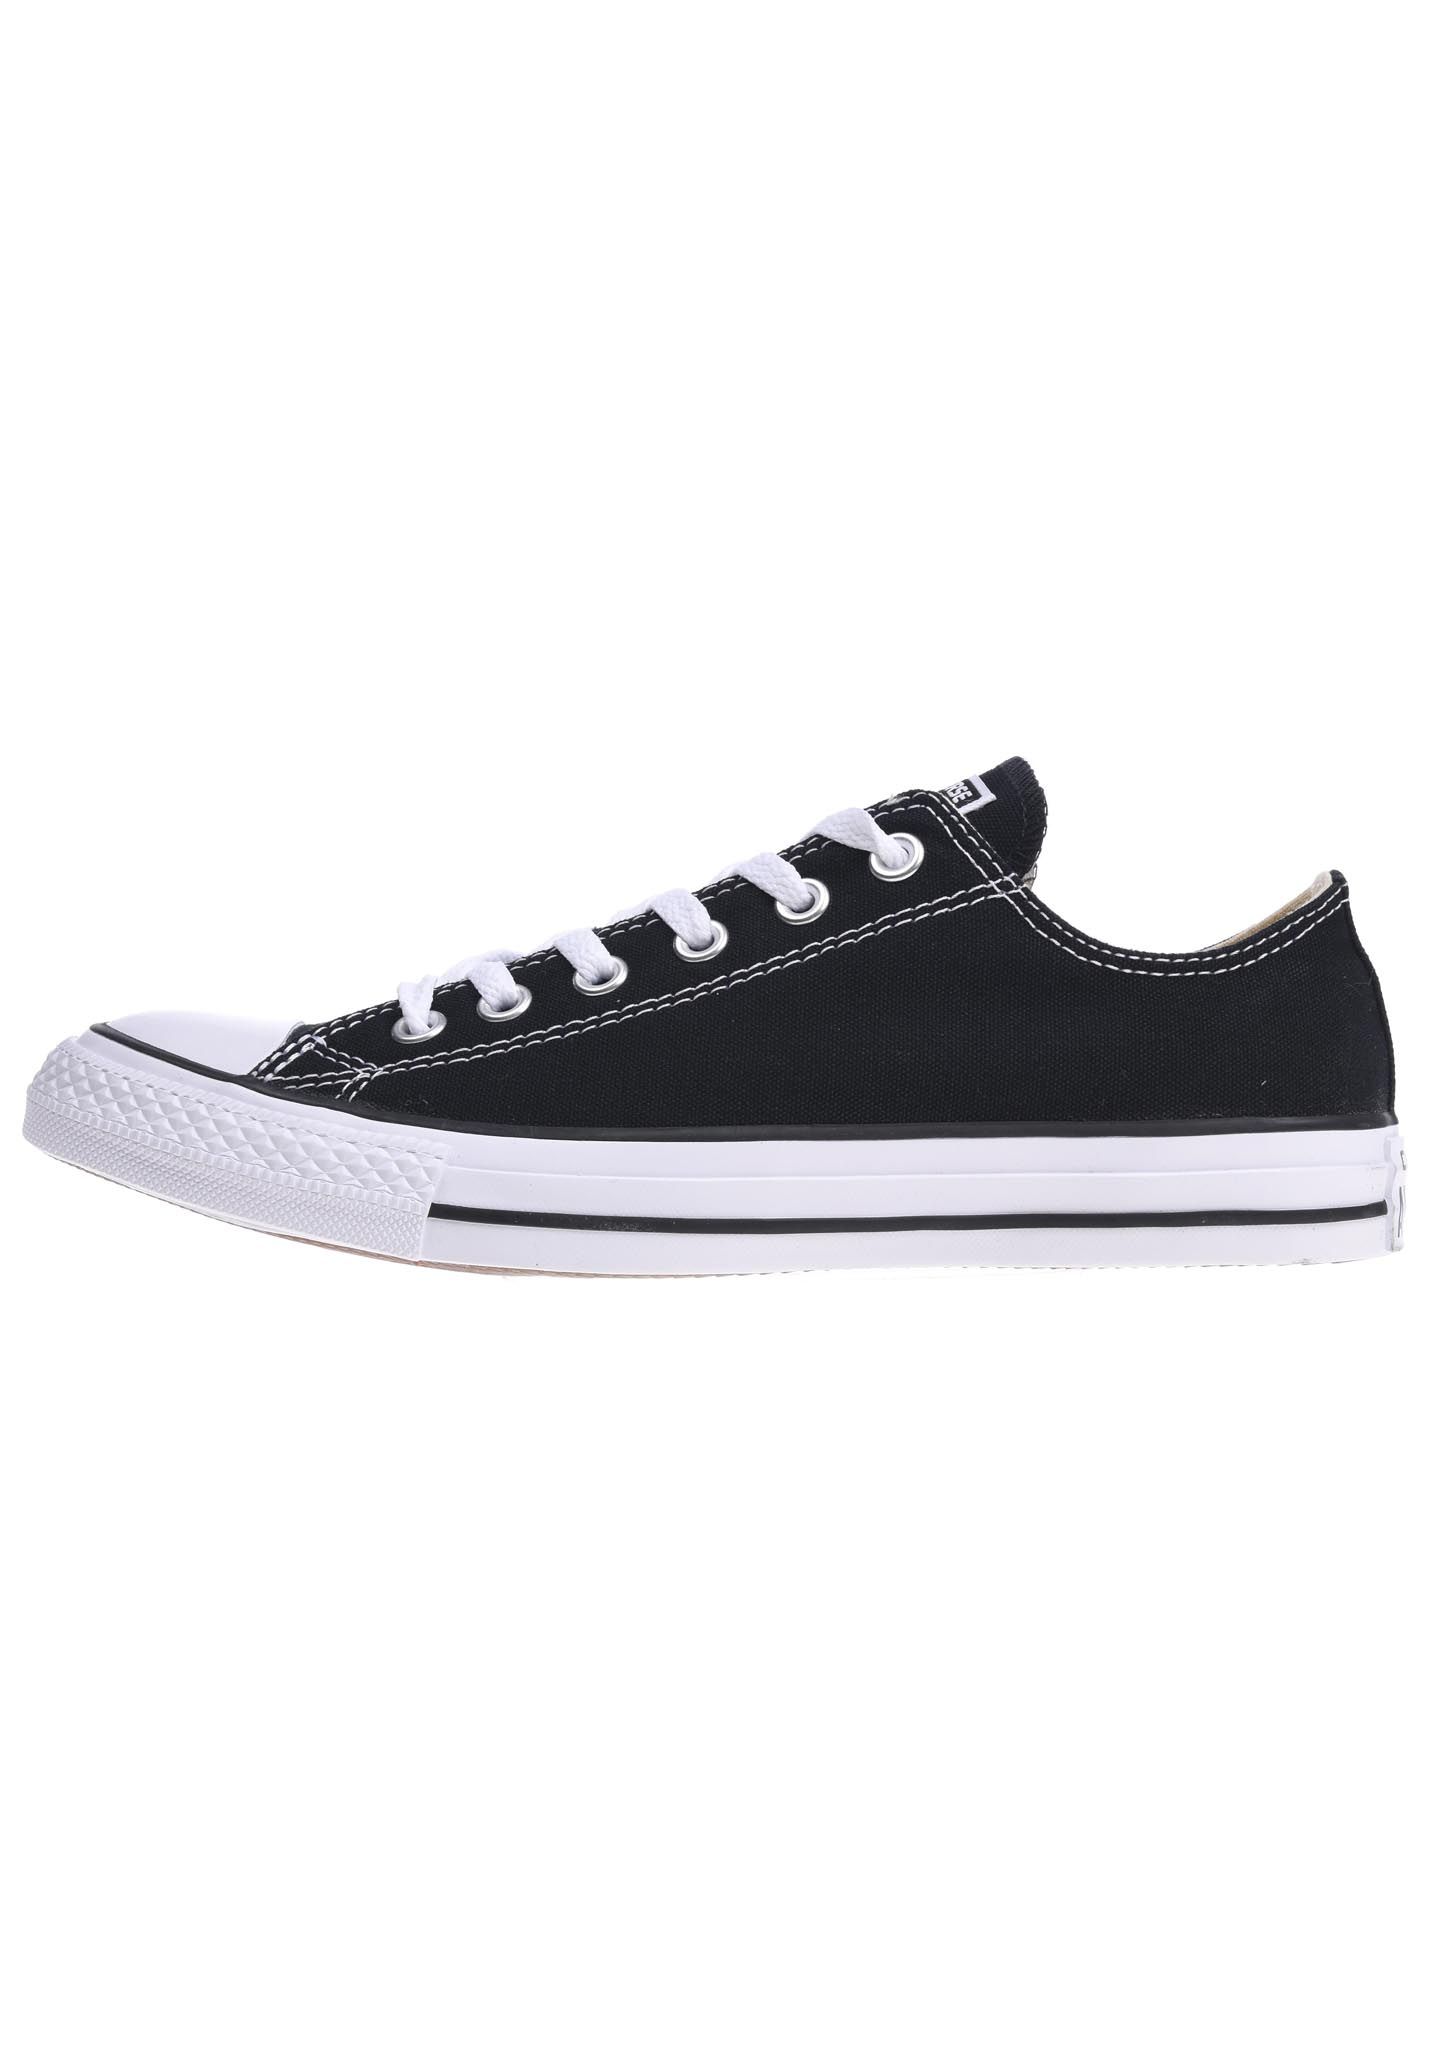 Converse Chuck Taylor All Star Ox Sneaker black + white 39